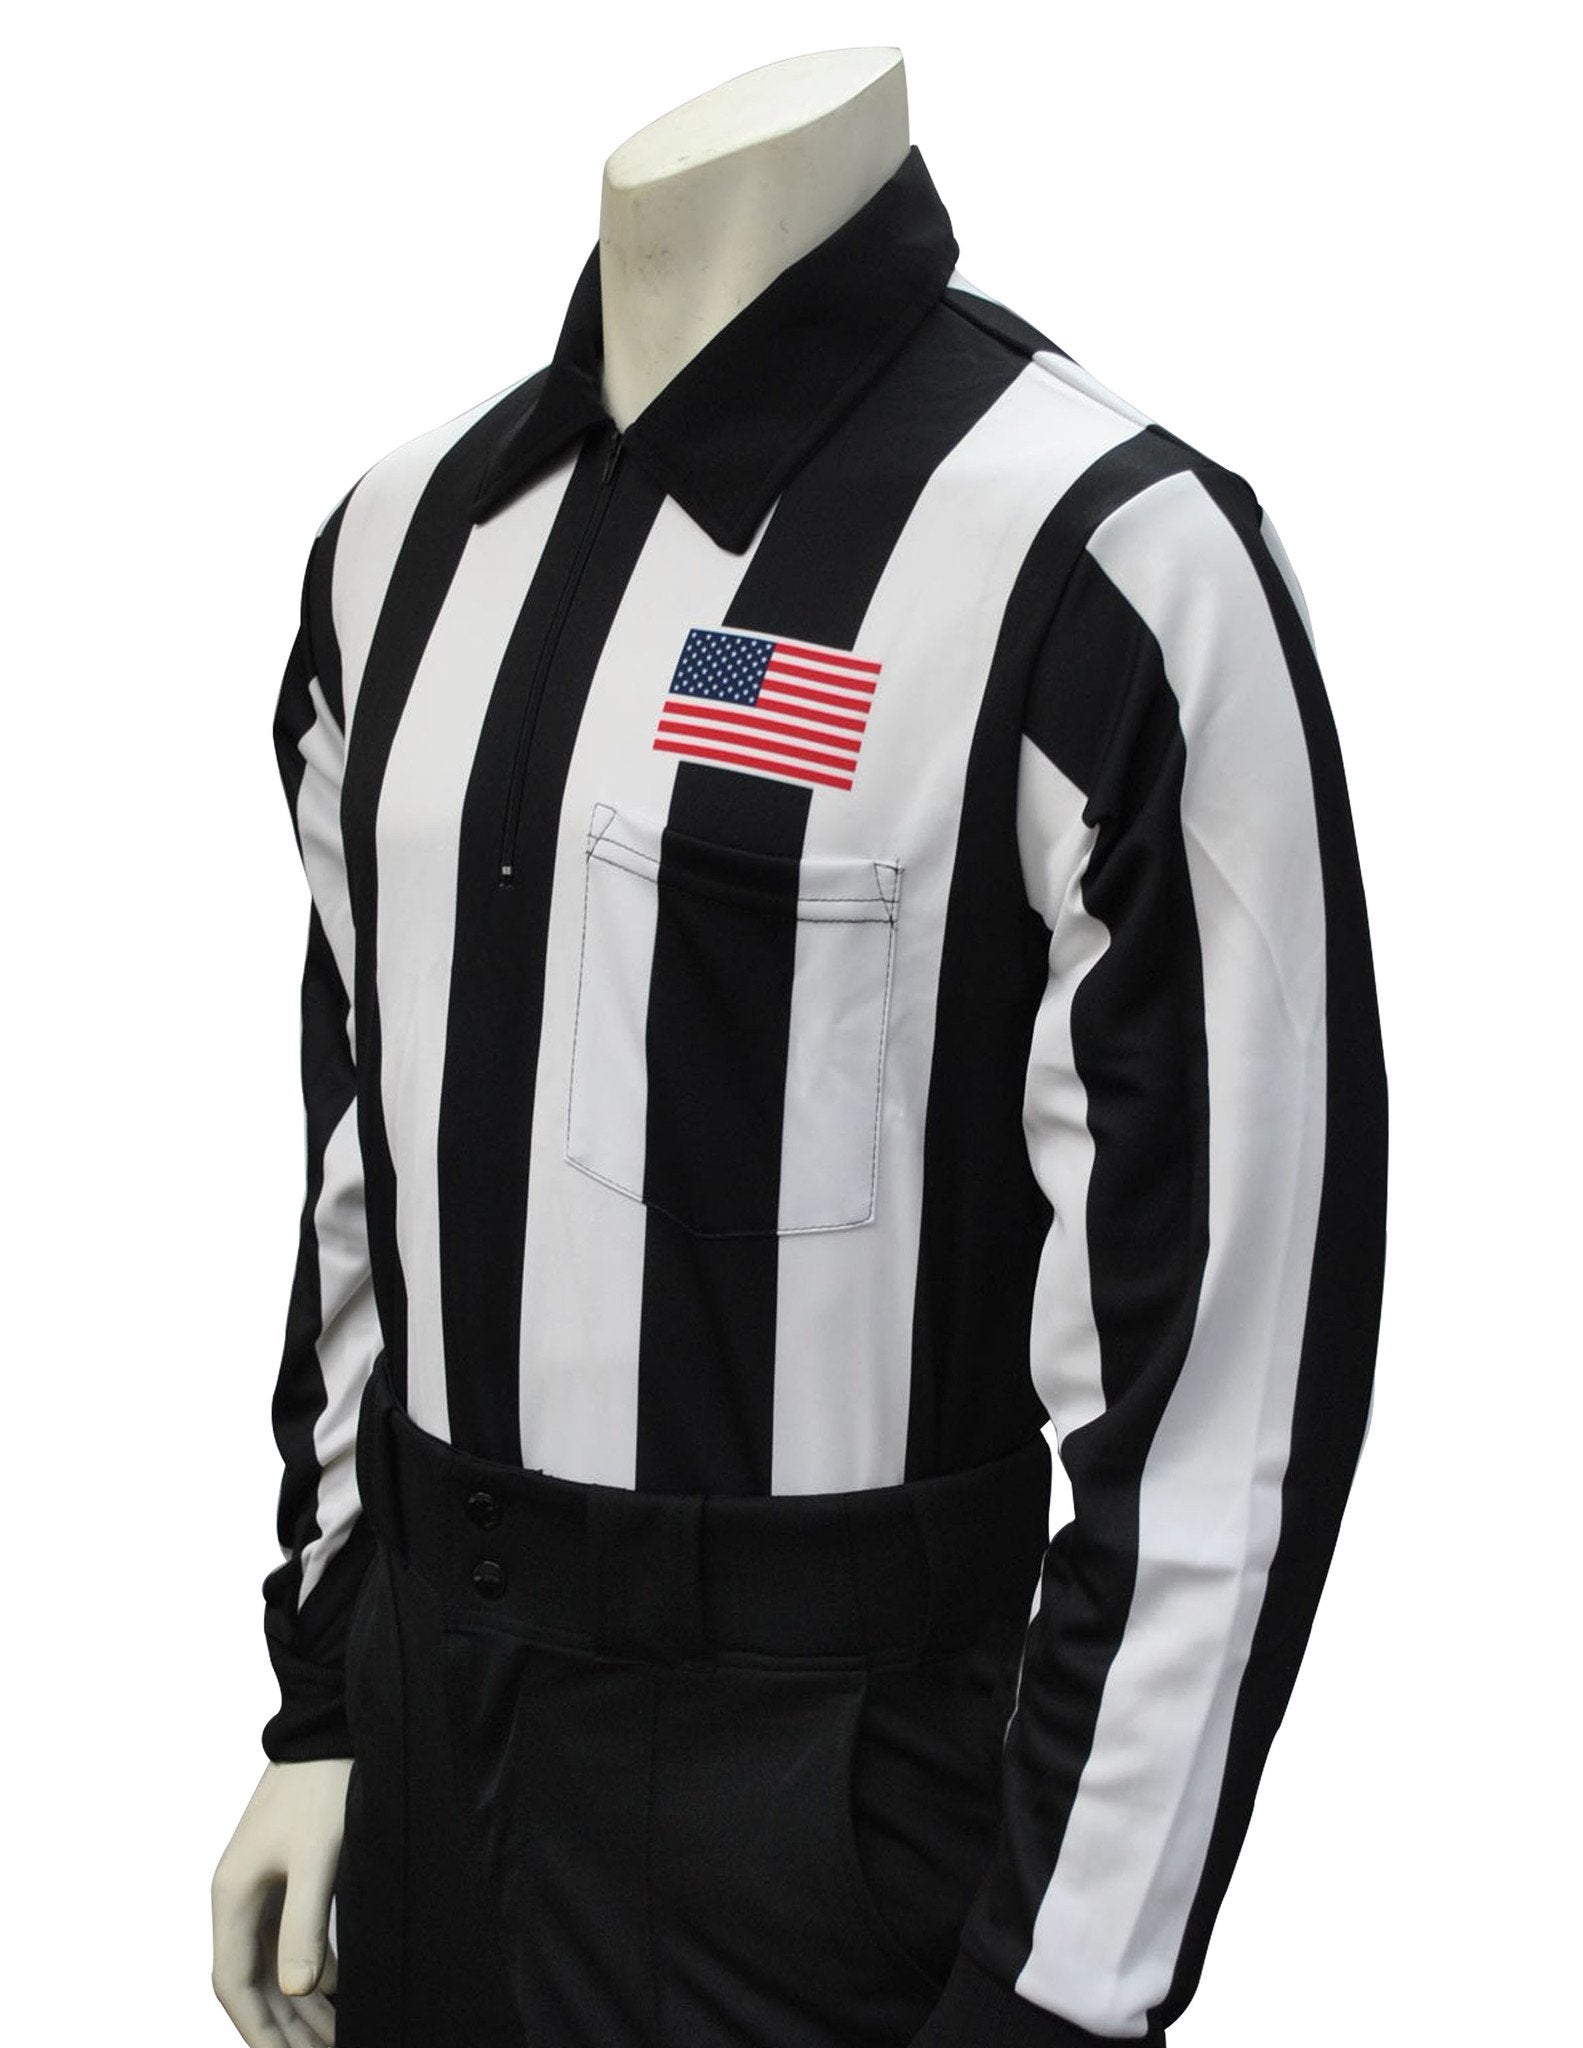 USA110 - Smitty "Made in USA" -  Football Long Sleeve Shirt w/ Flag Above Pocket